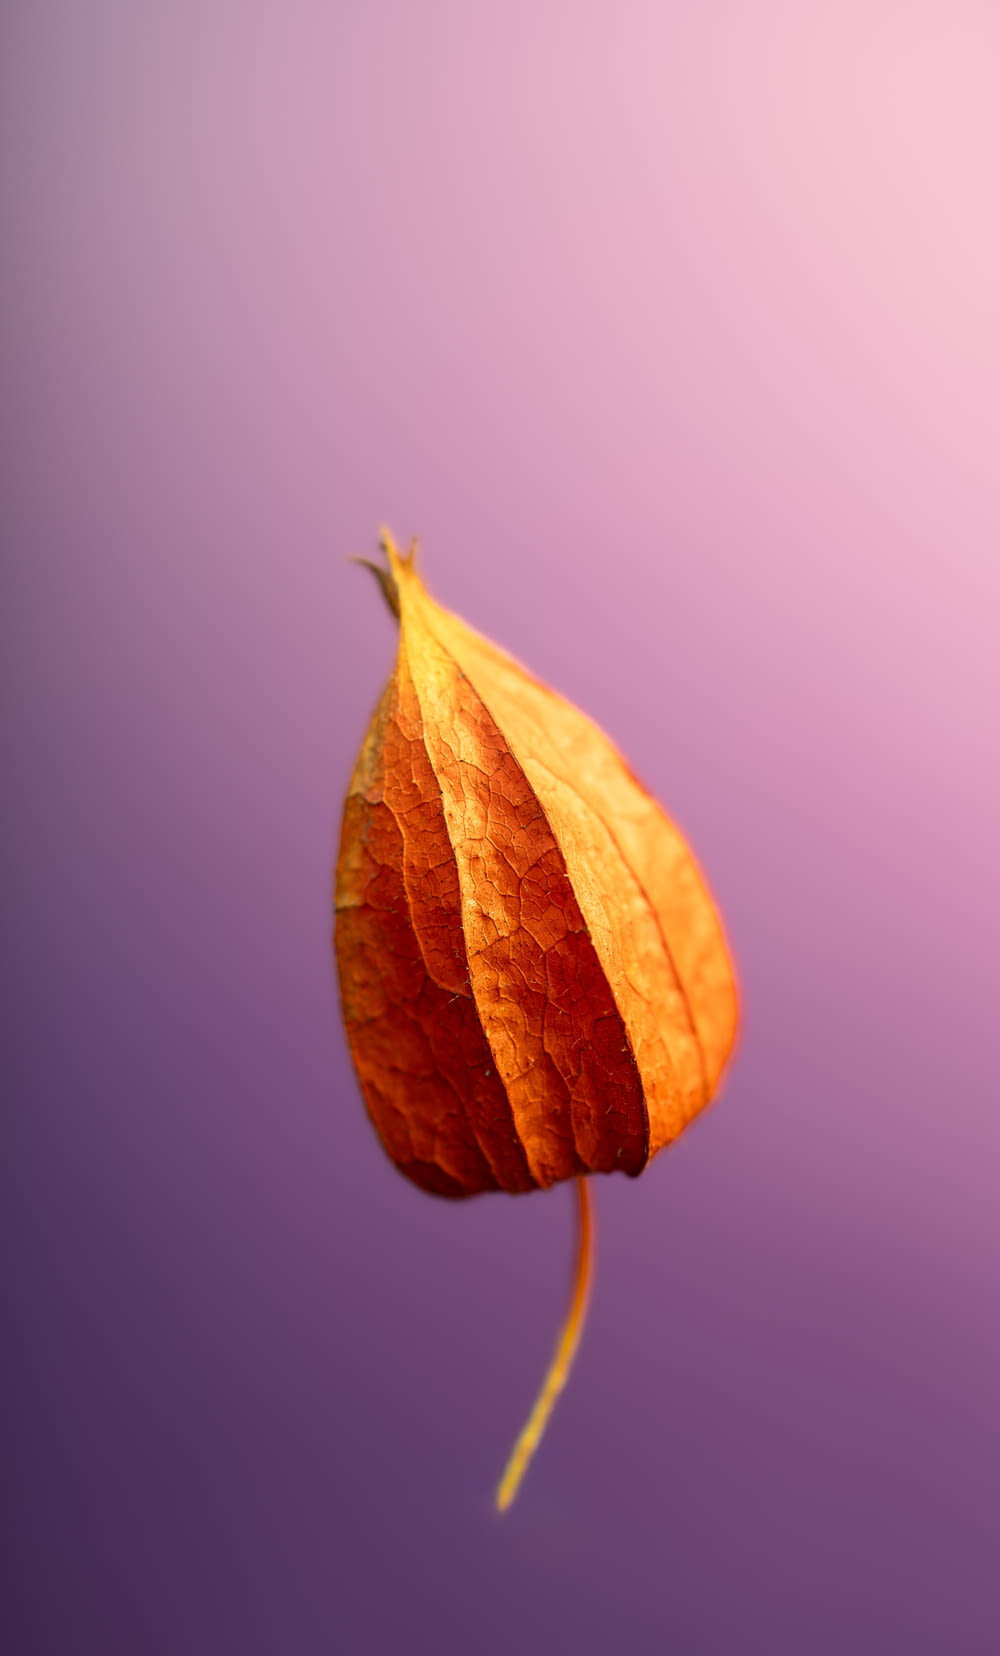 a single orange leaf on a purple background